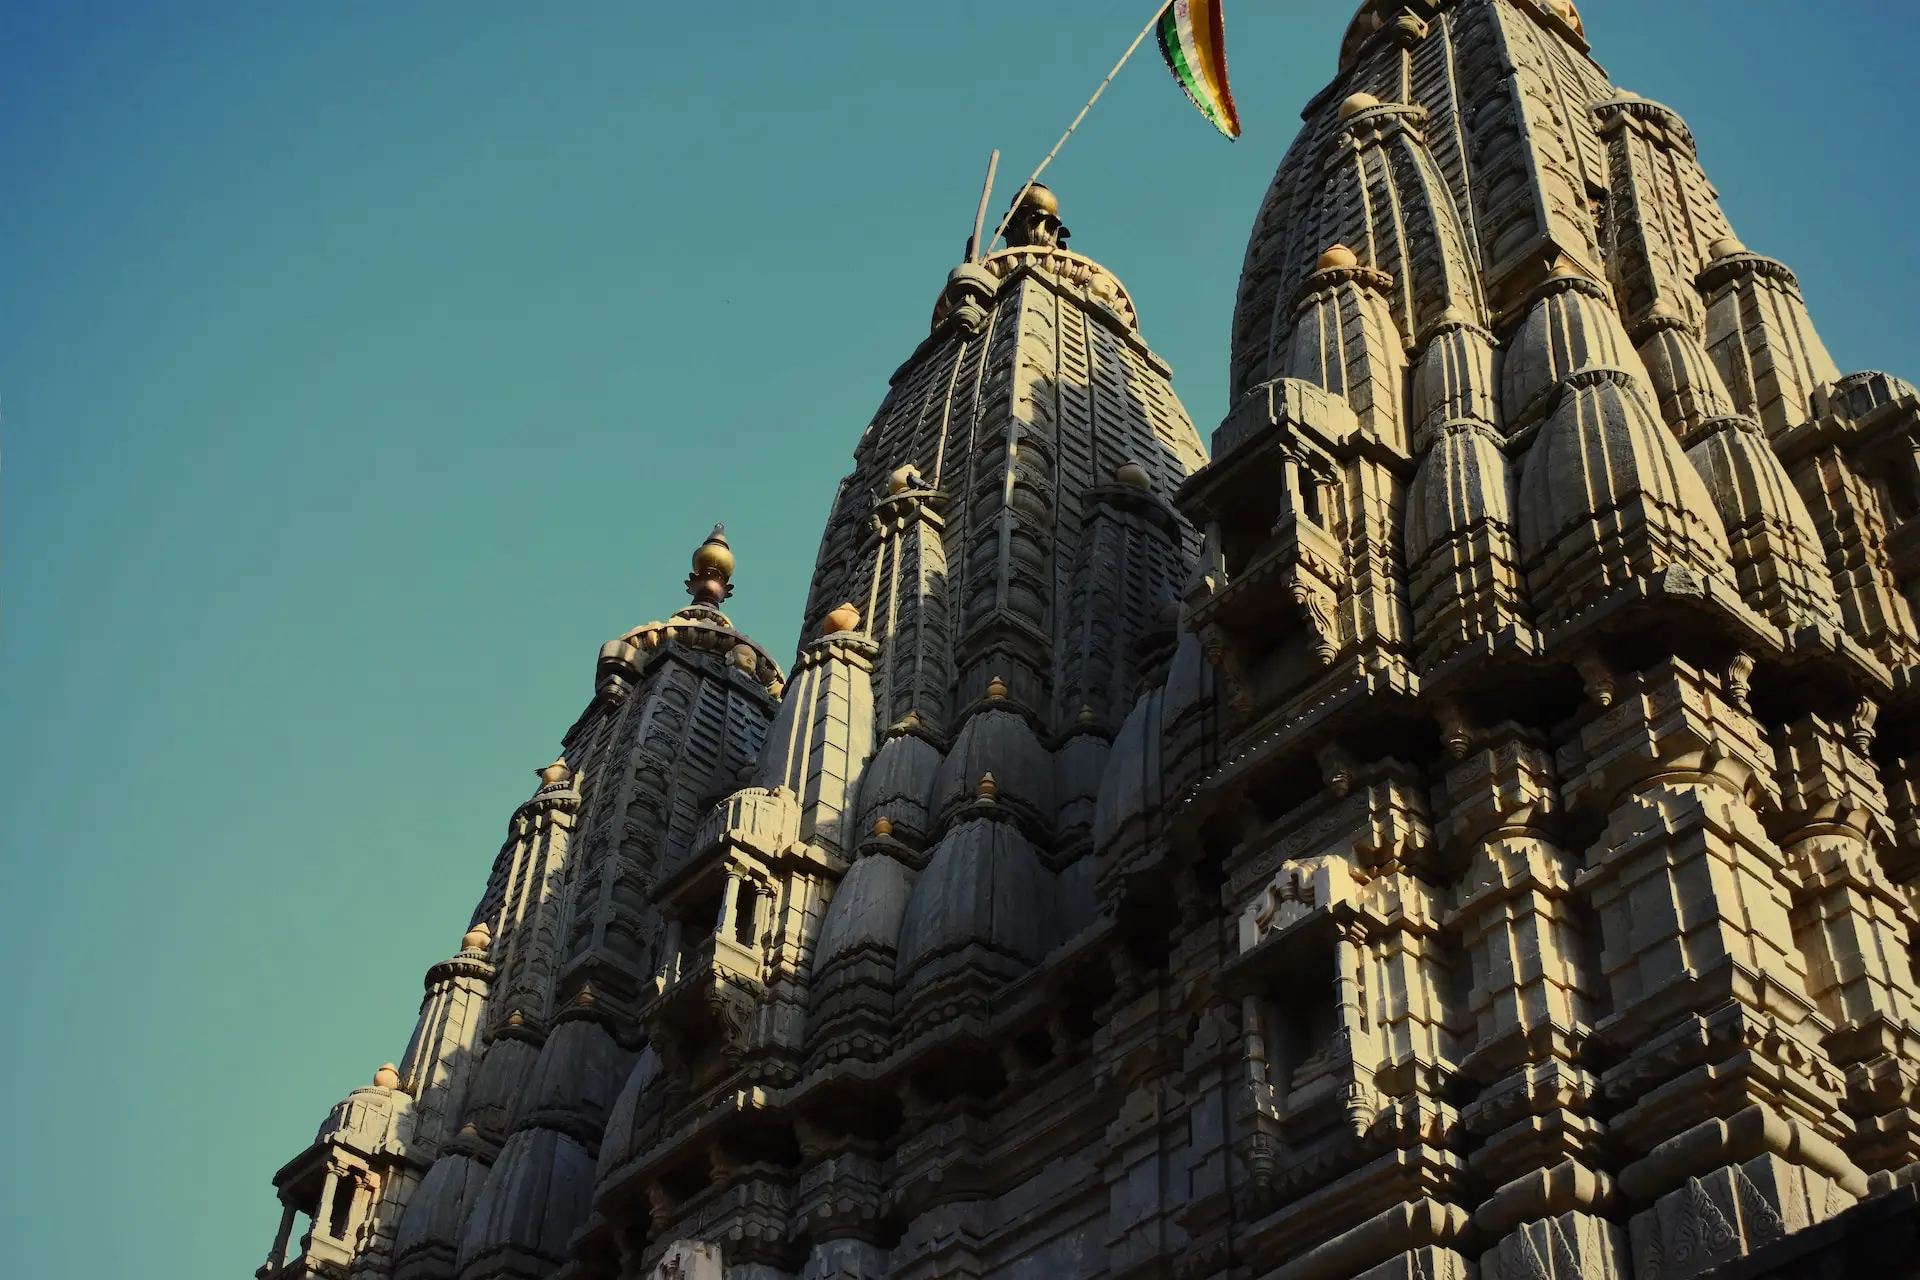 The three shikhar (top) of a Jain temple represents the Three Jewels.